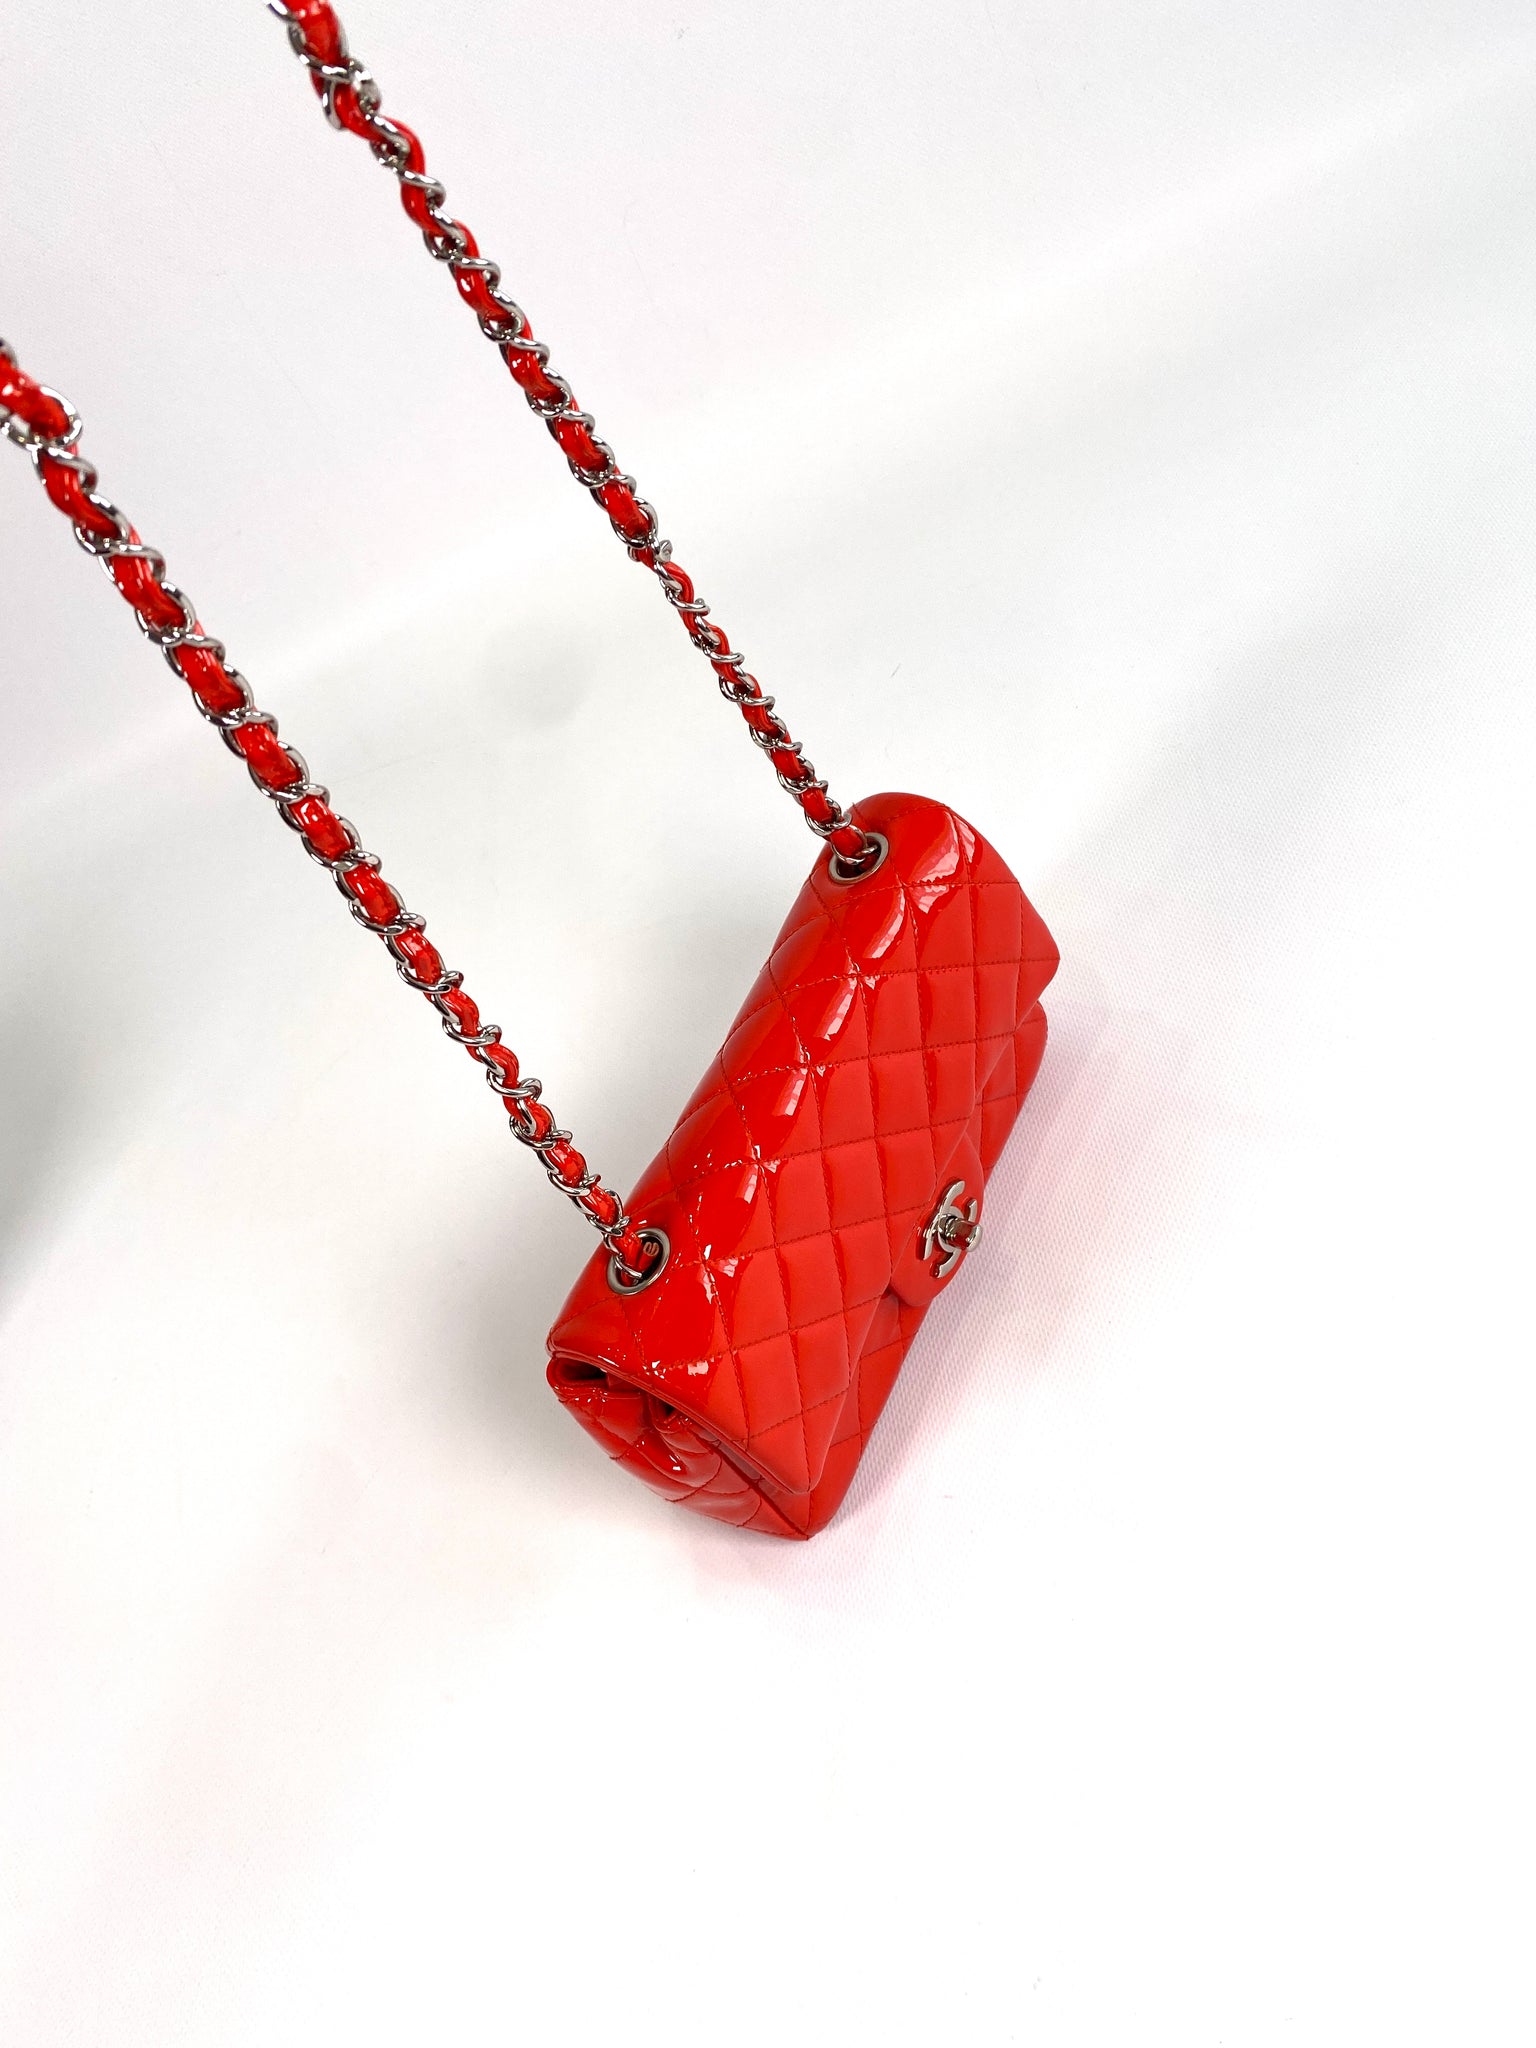 Chanel Classic Flap Rectangular Mini Bag Red Lambskin